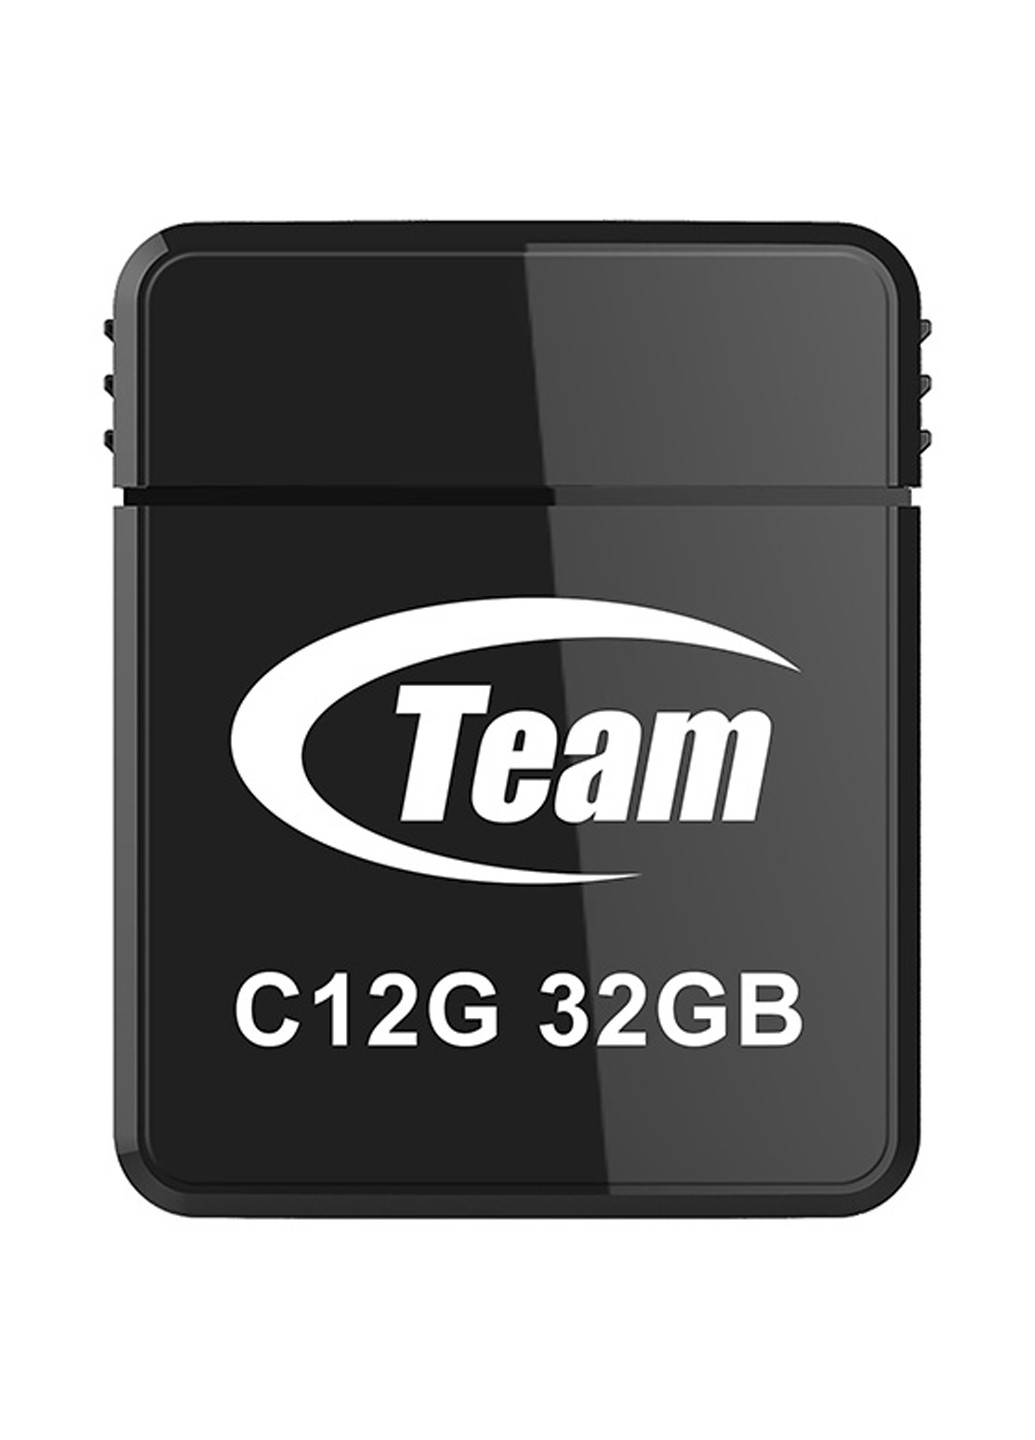 Флеш память USB C12G 32Gb Black (TC12G32GB01) Team флеш память usb team c12g 32gb black (tc12g32gb01) (134201769)